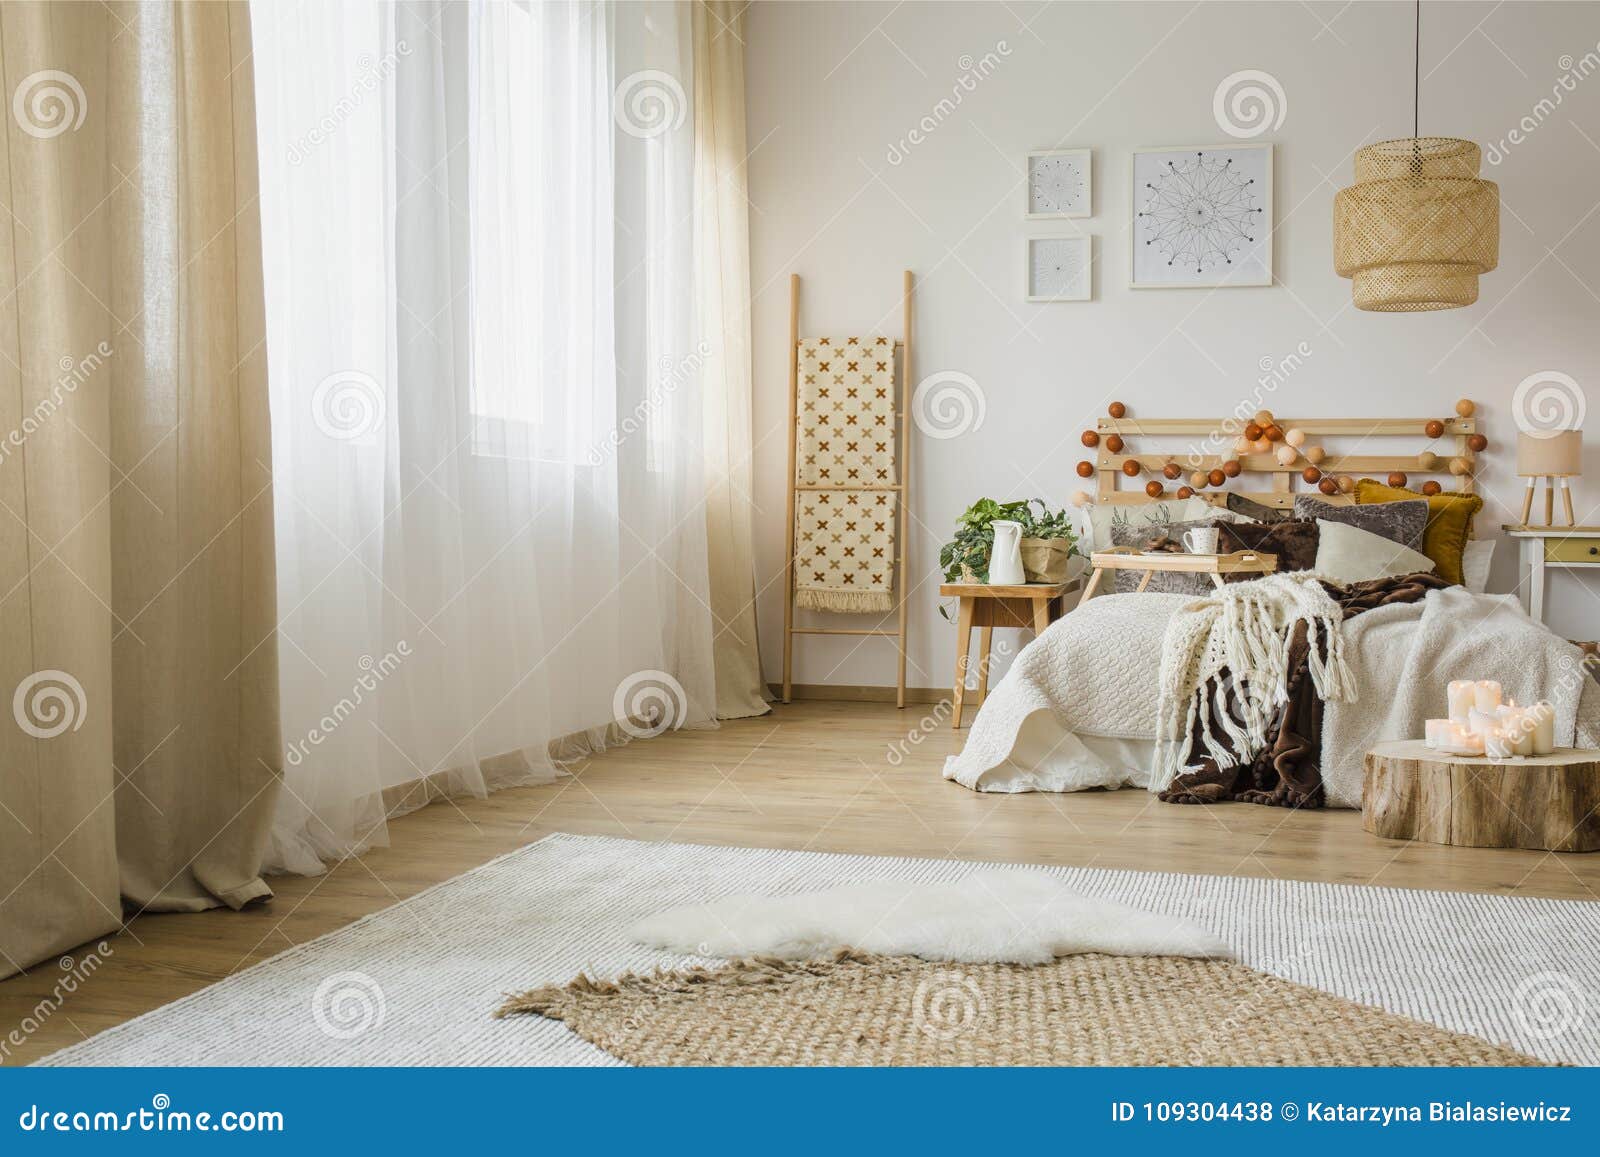 hygge style bedroom interior